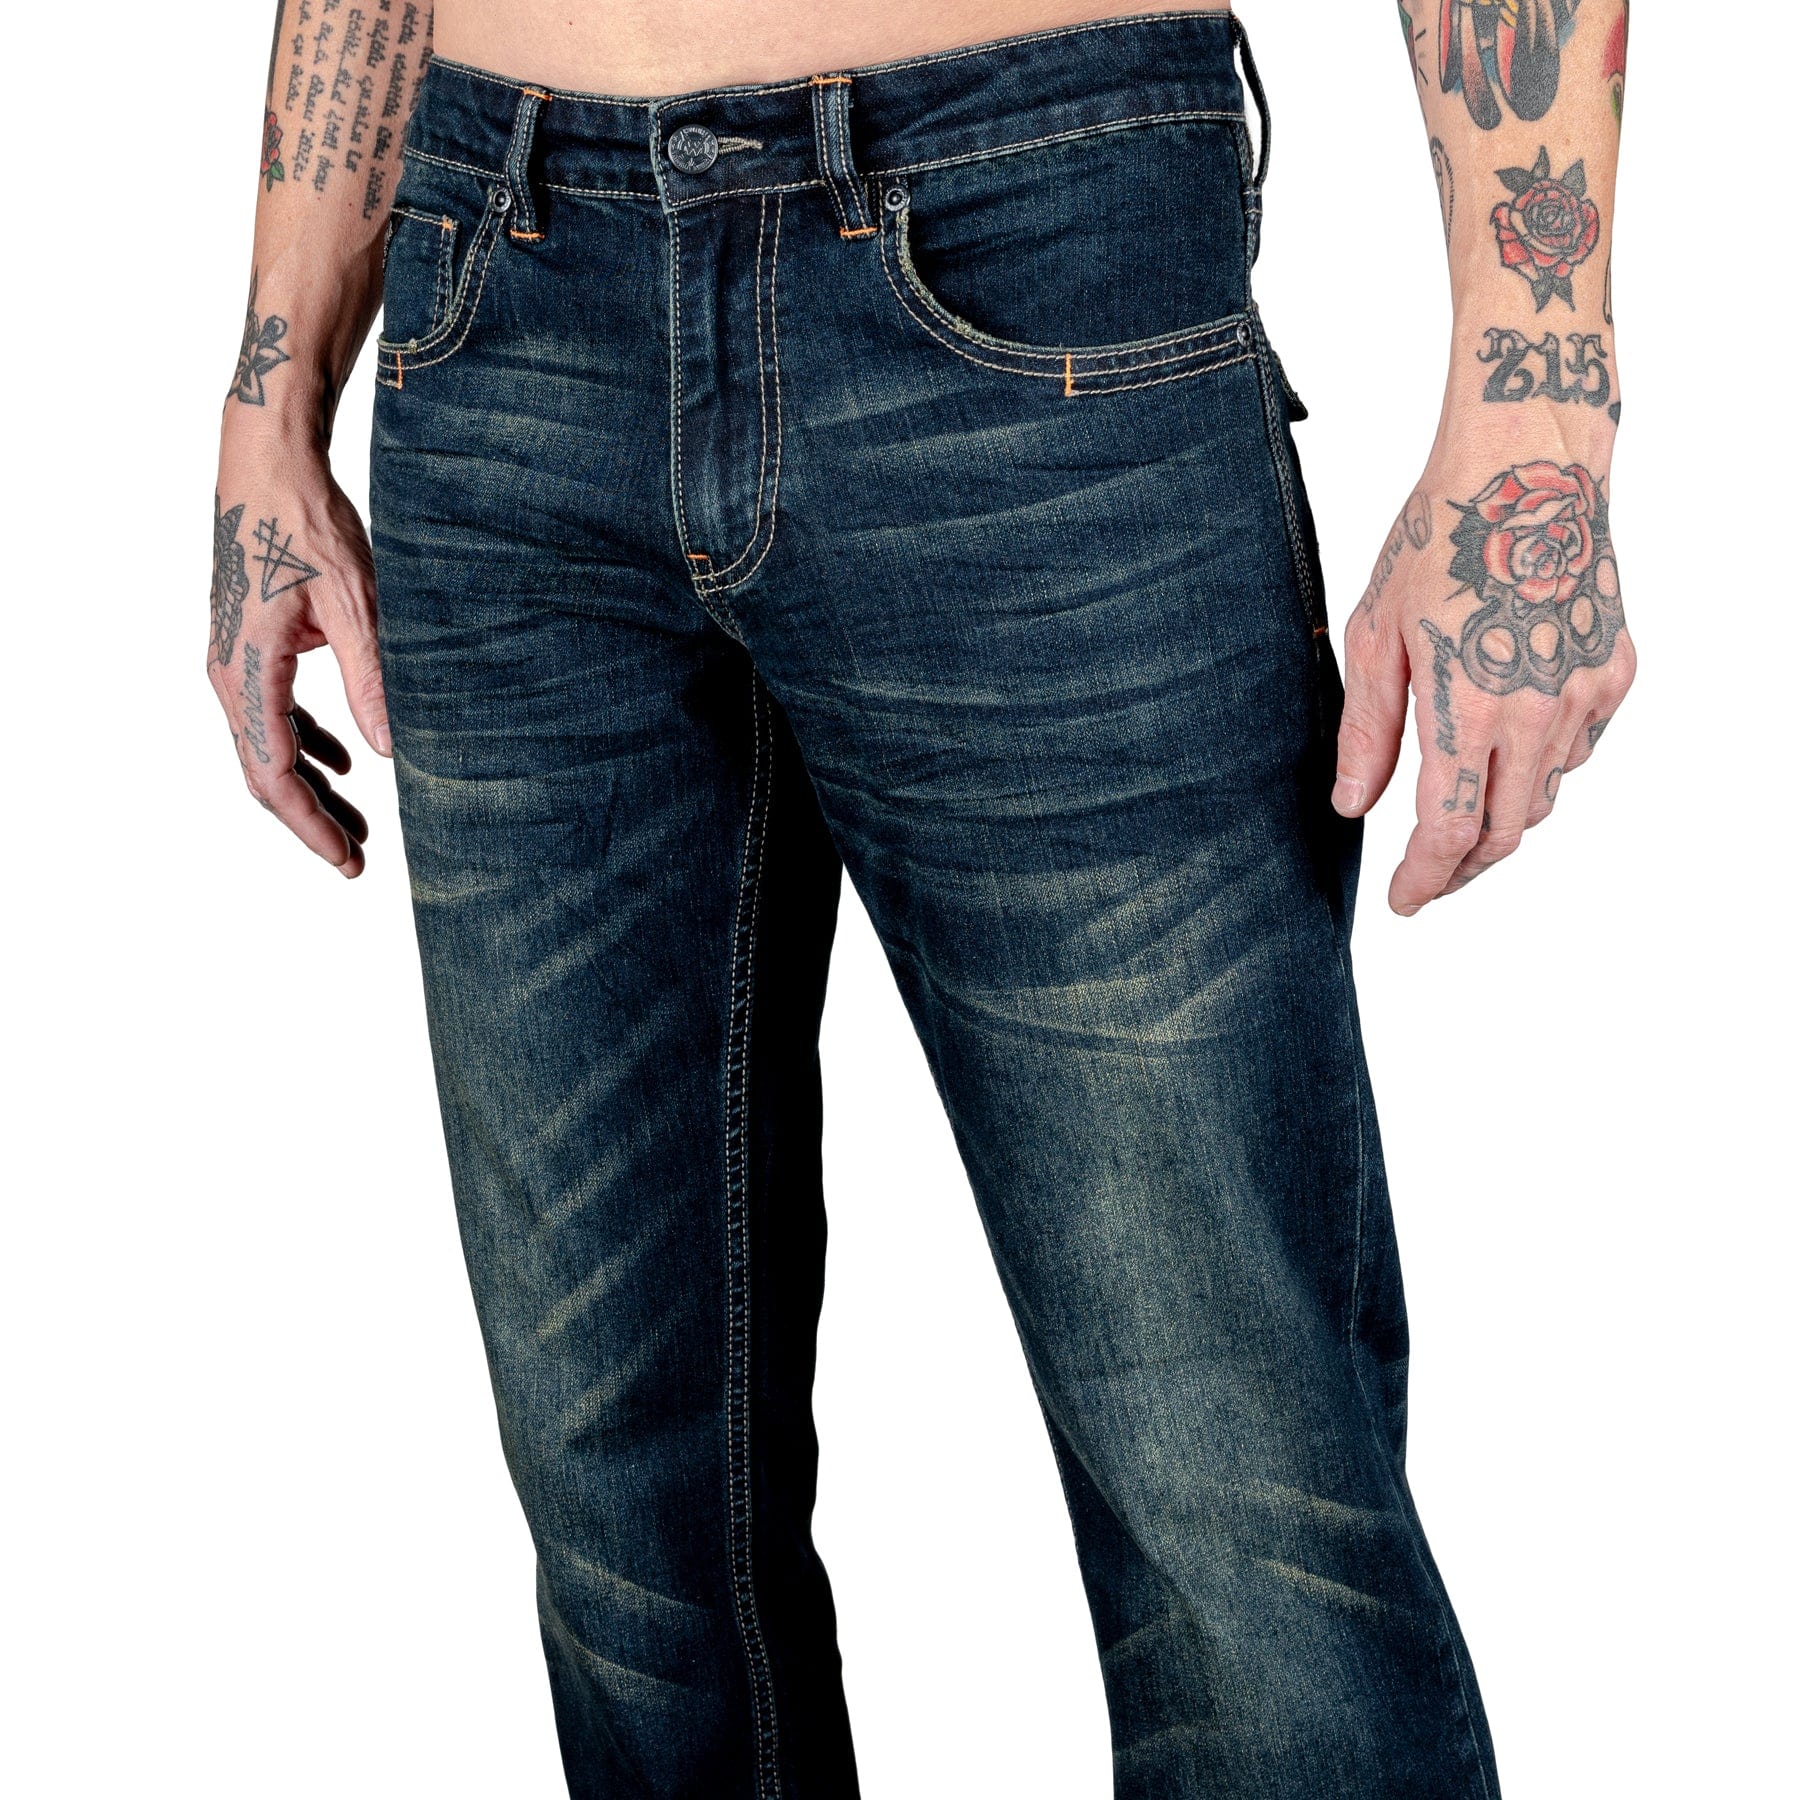 Essentials Collection Pants Trailblazer Jeans - Midnight Blue